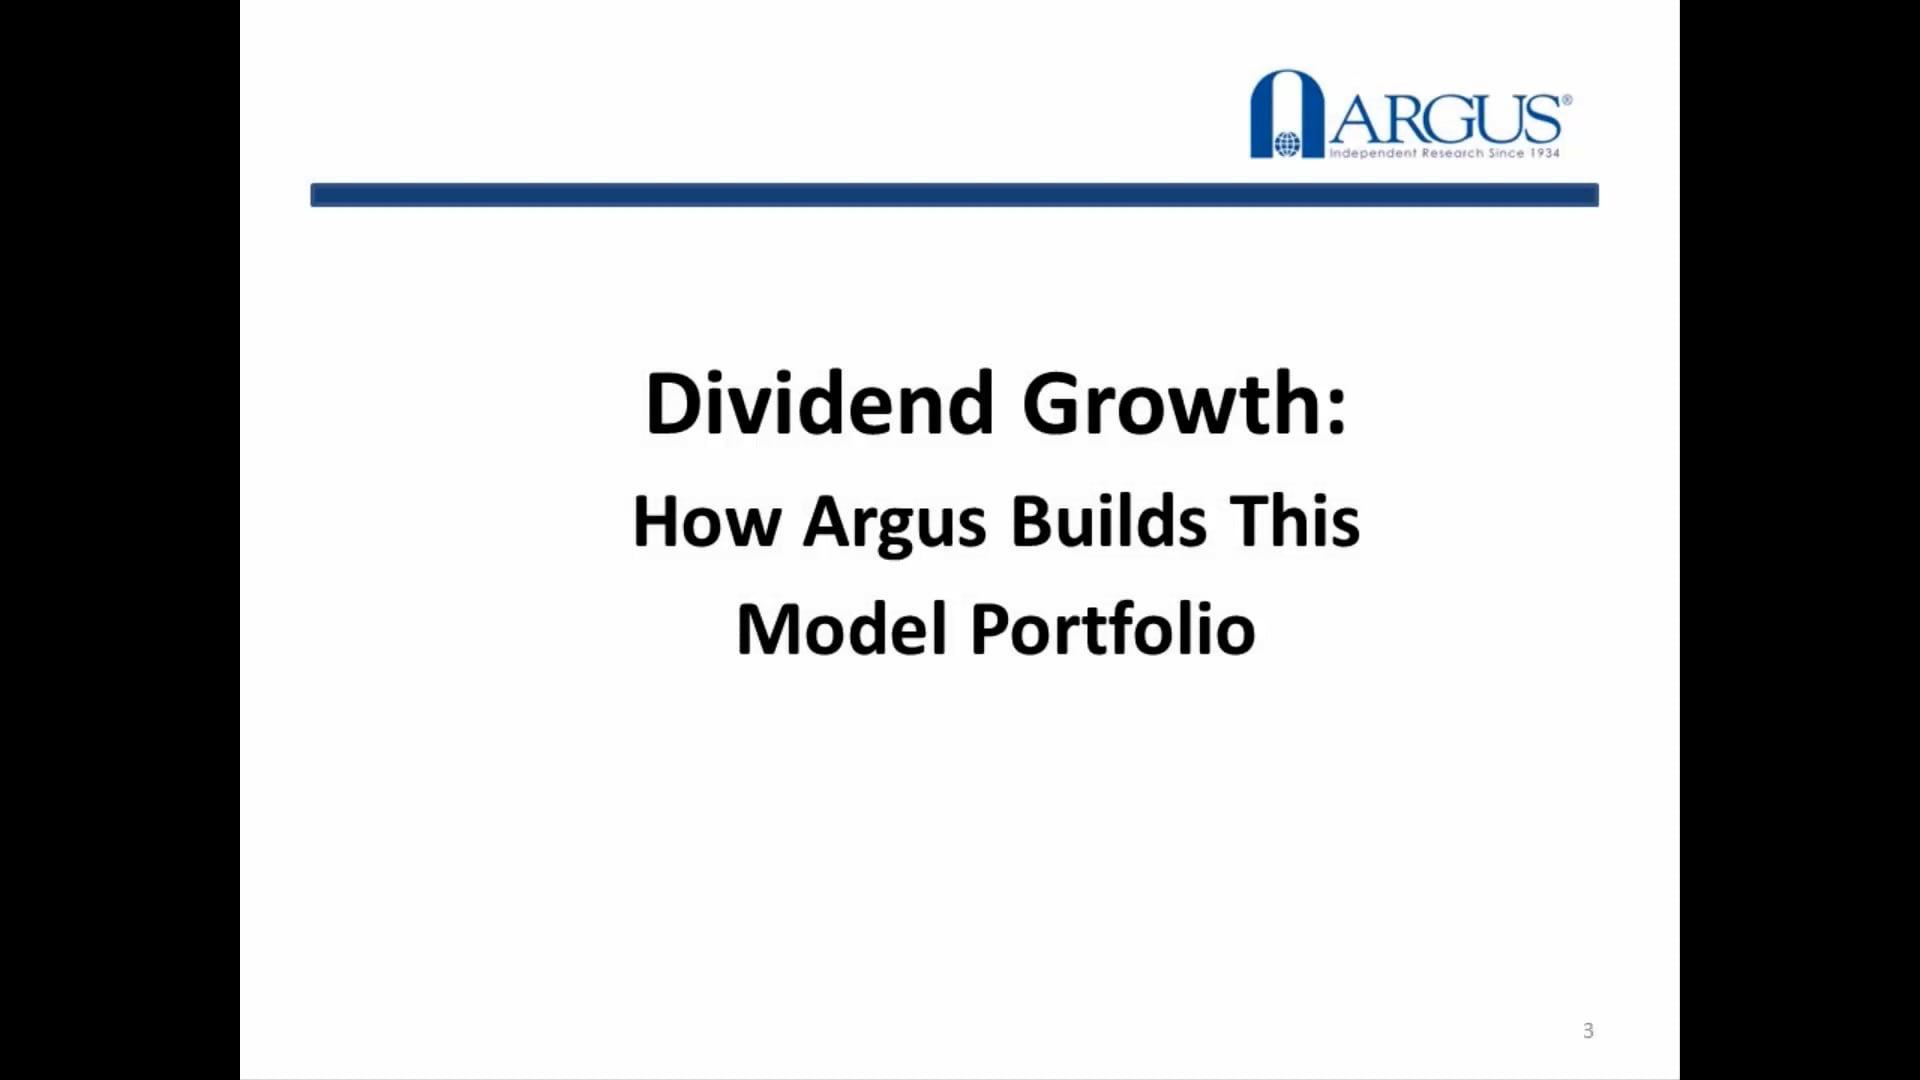 How Argus Builds a Dividend Growth Model Portfolio